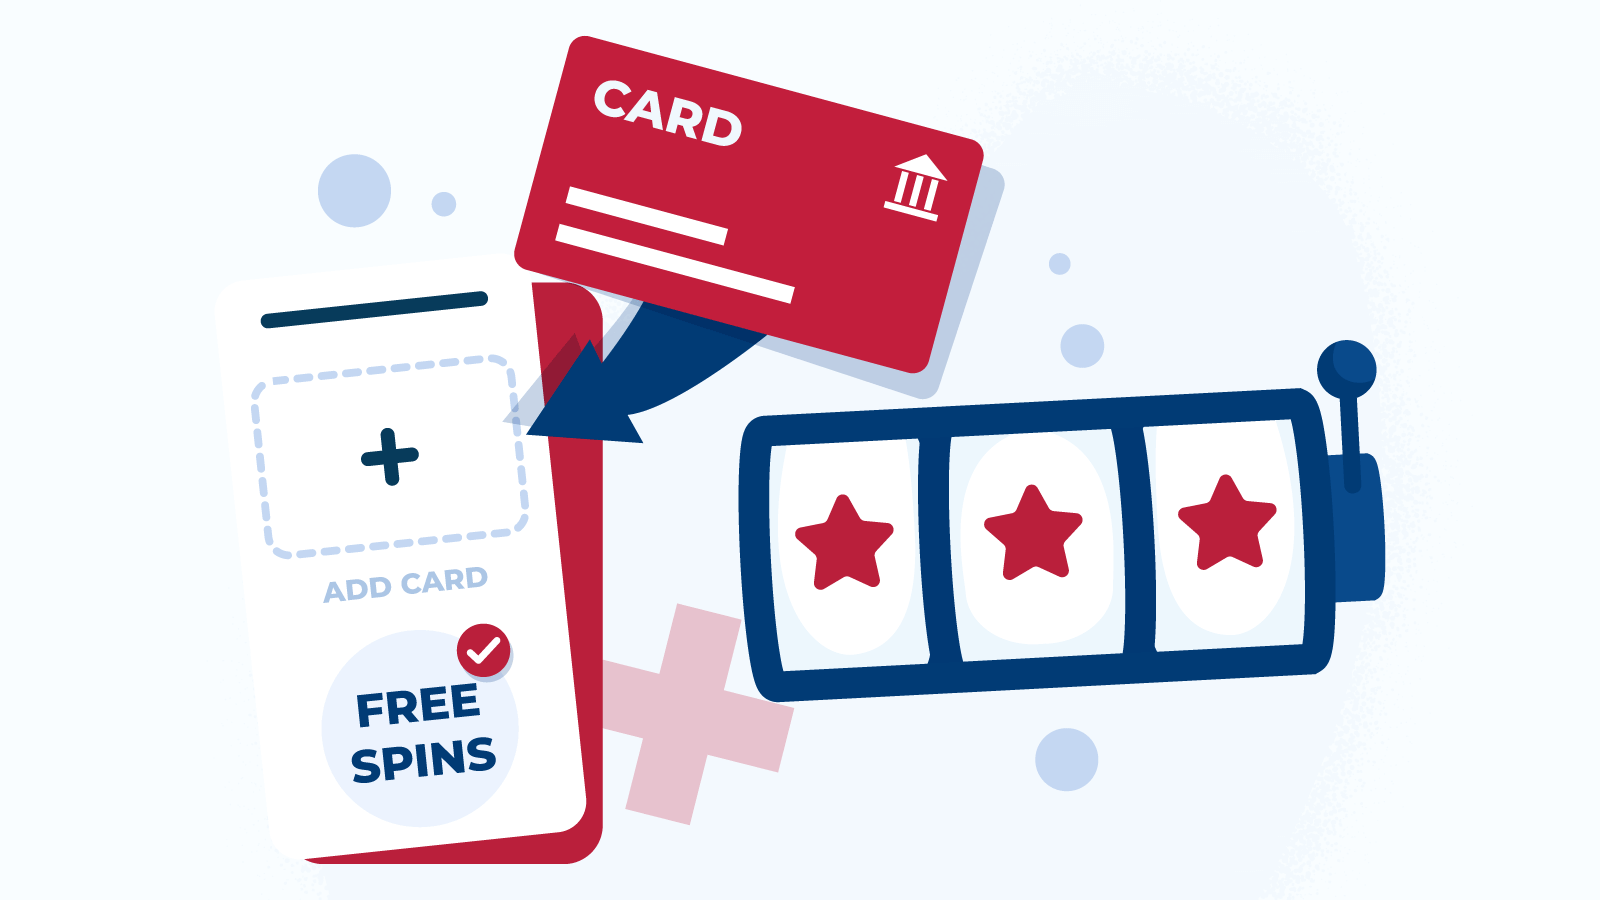 Free Spins on card registration UK bonuses explained